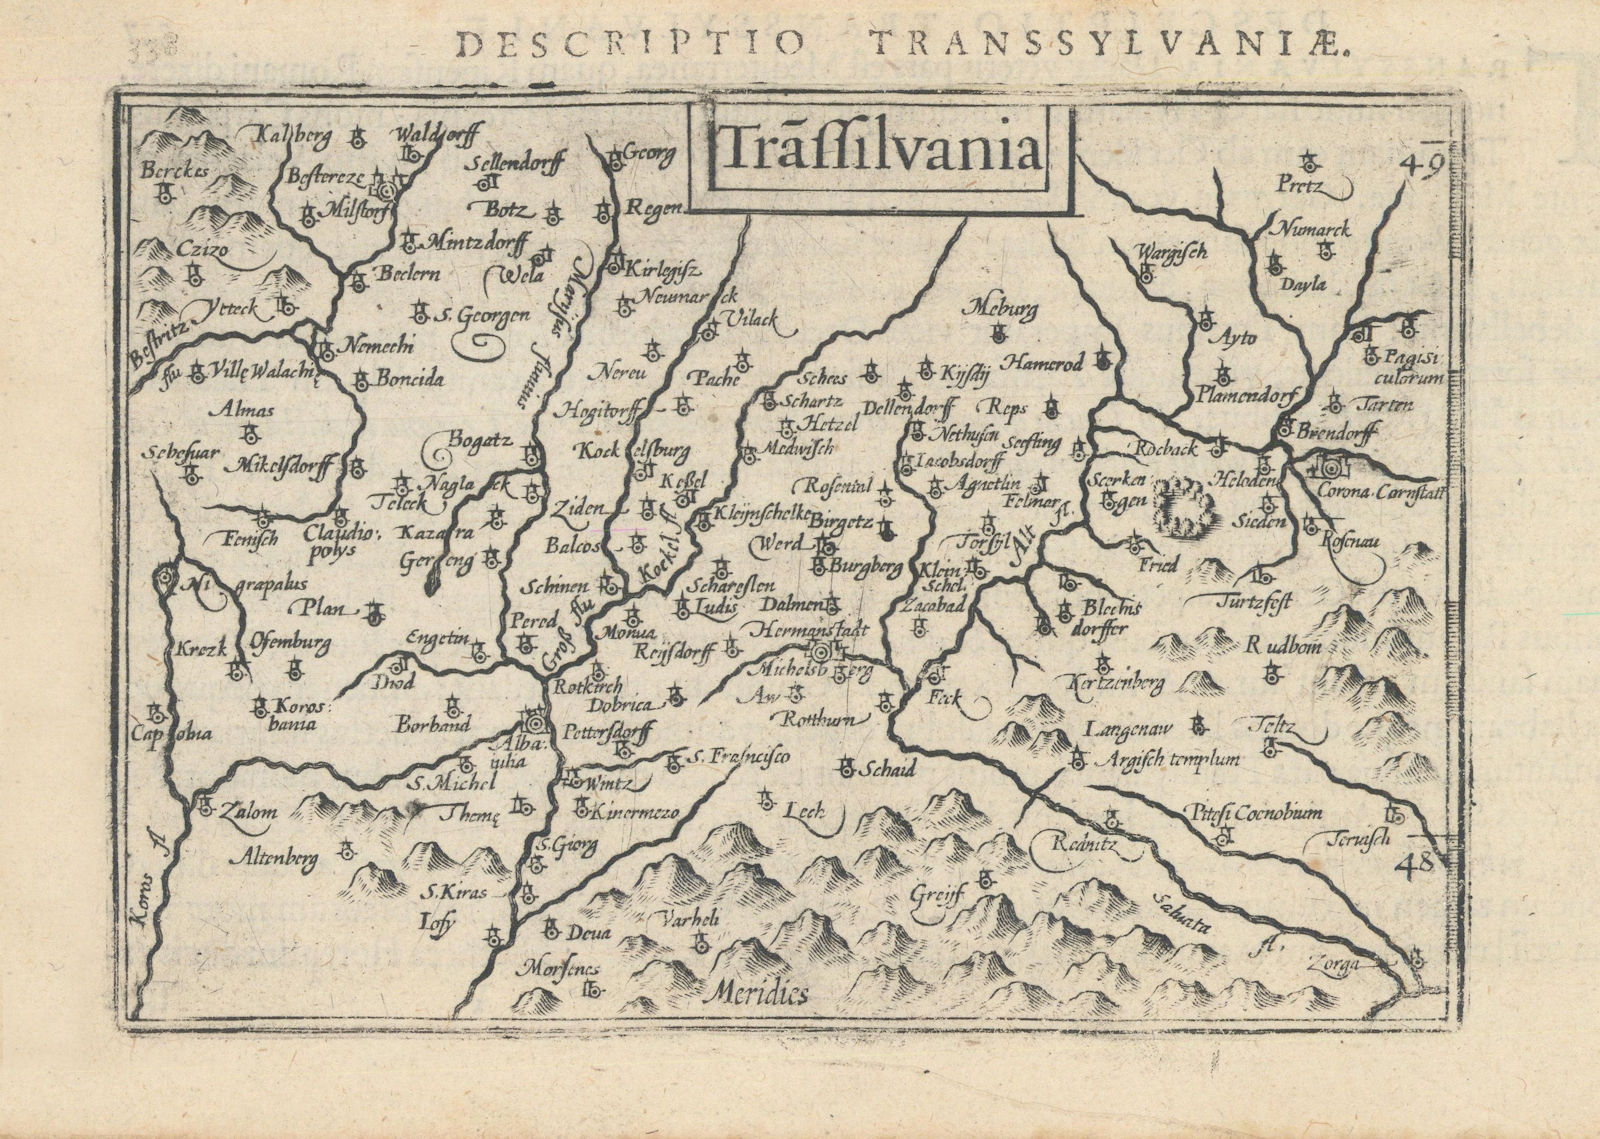 Transsylvaniae / Transsylvania by Bertius / Langenes. Transylvania 1603 map